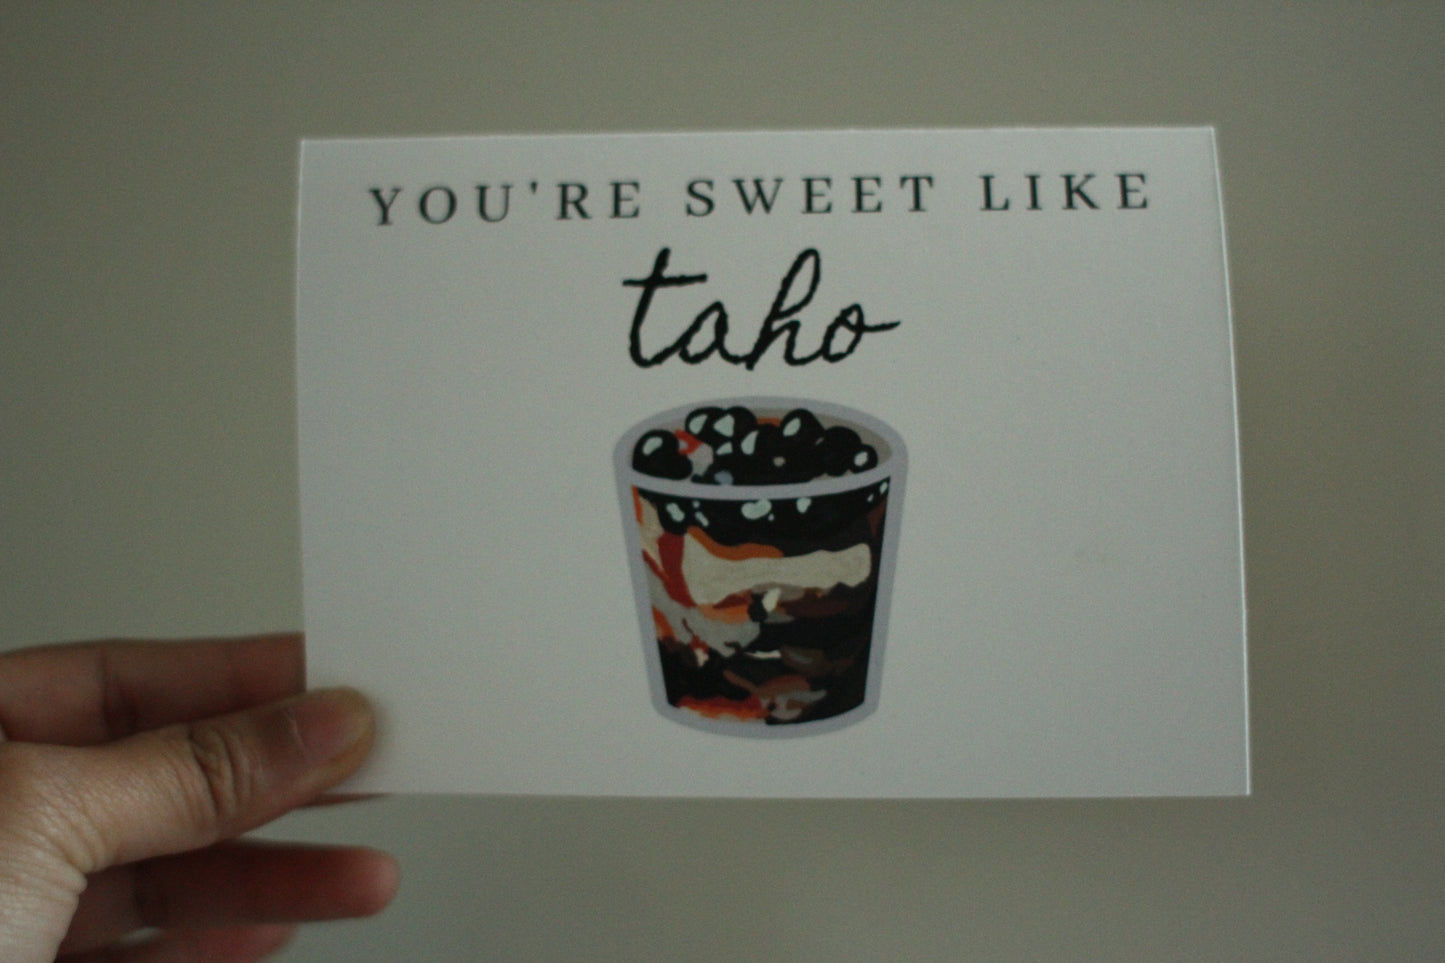 You're Sweet Like Taho Greeting Cards